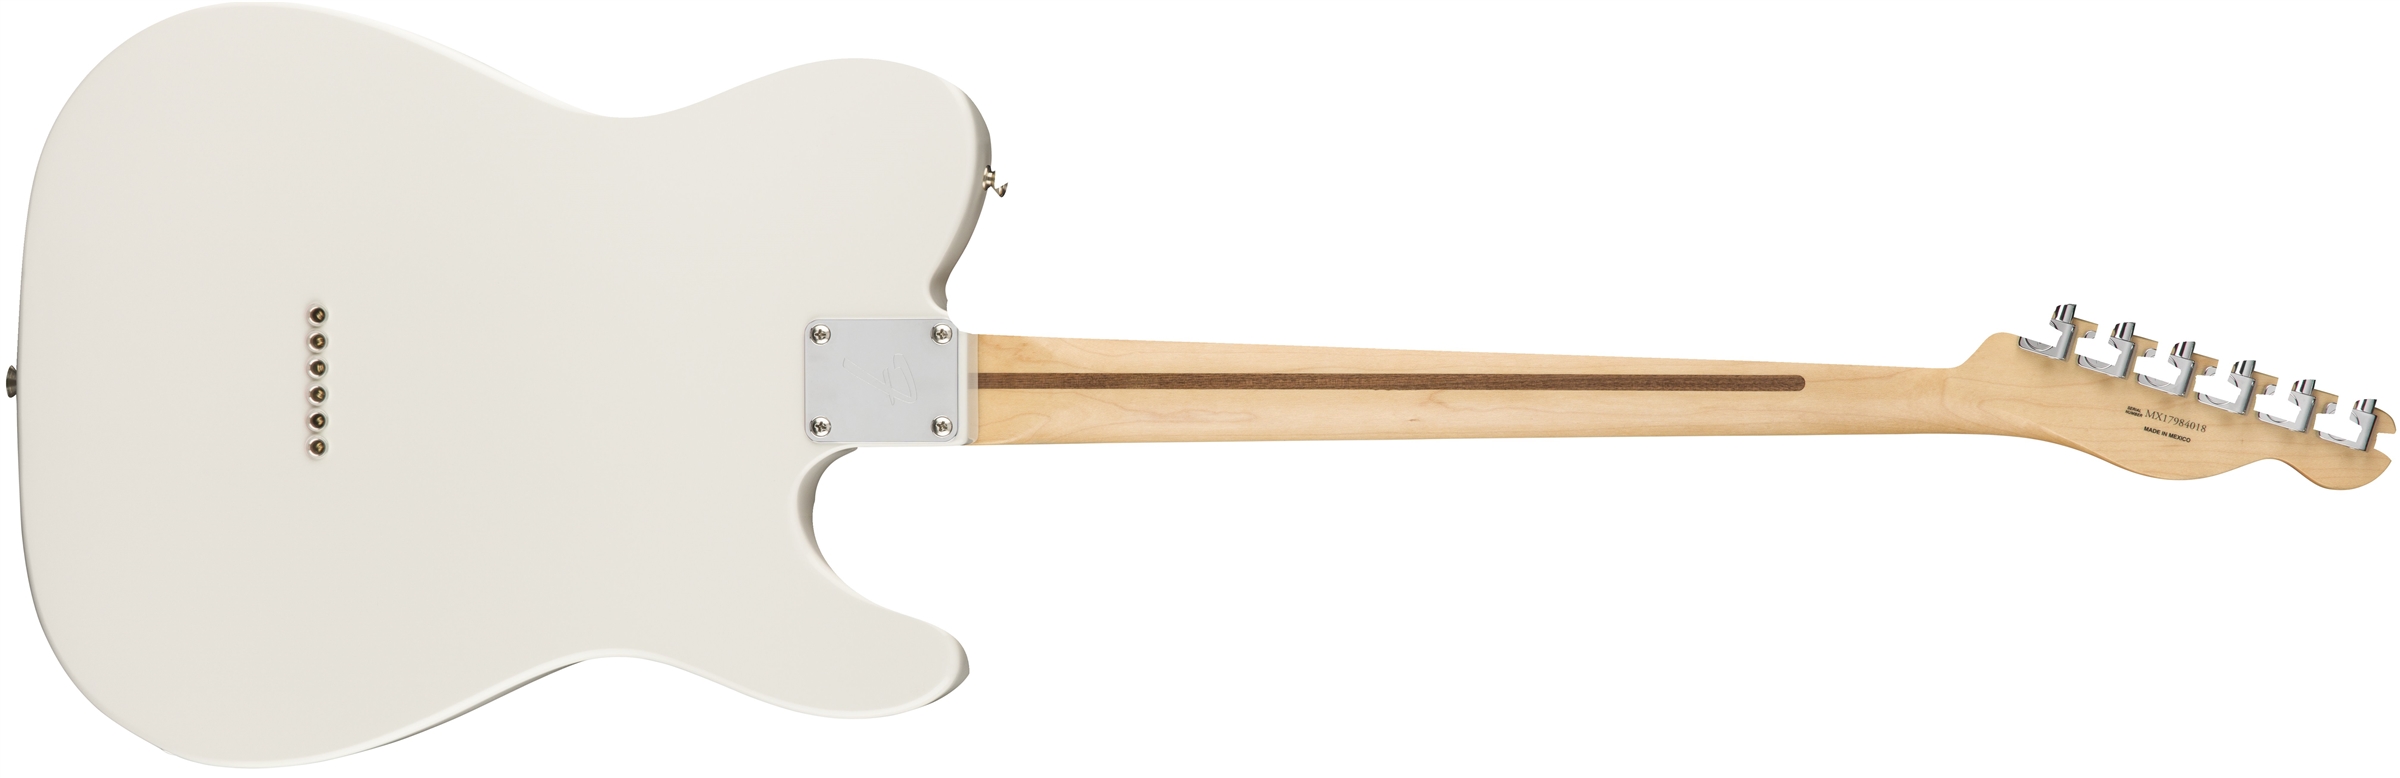 Fender Tele Player Lh Gaucher Mex Ss Pf - Polar White - Left-handed electric guitar - Variation 1